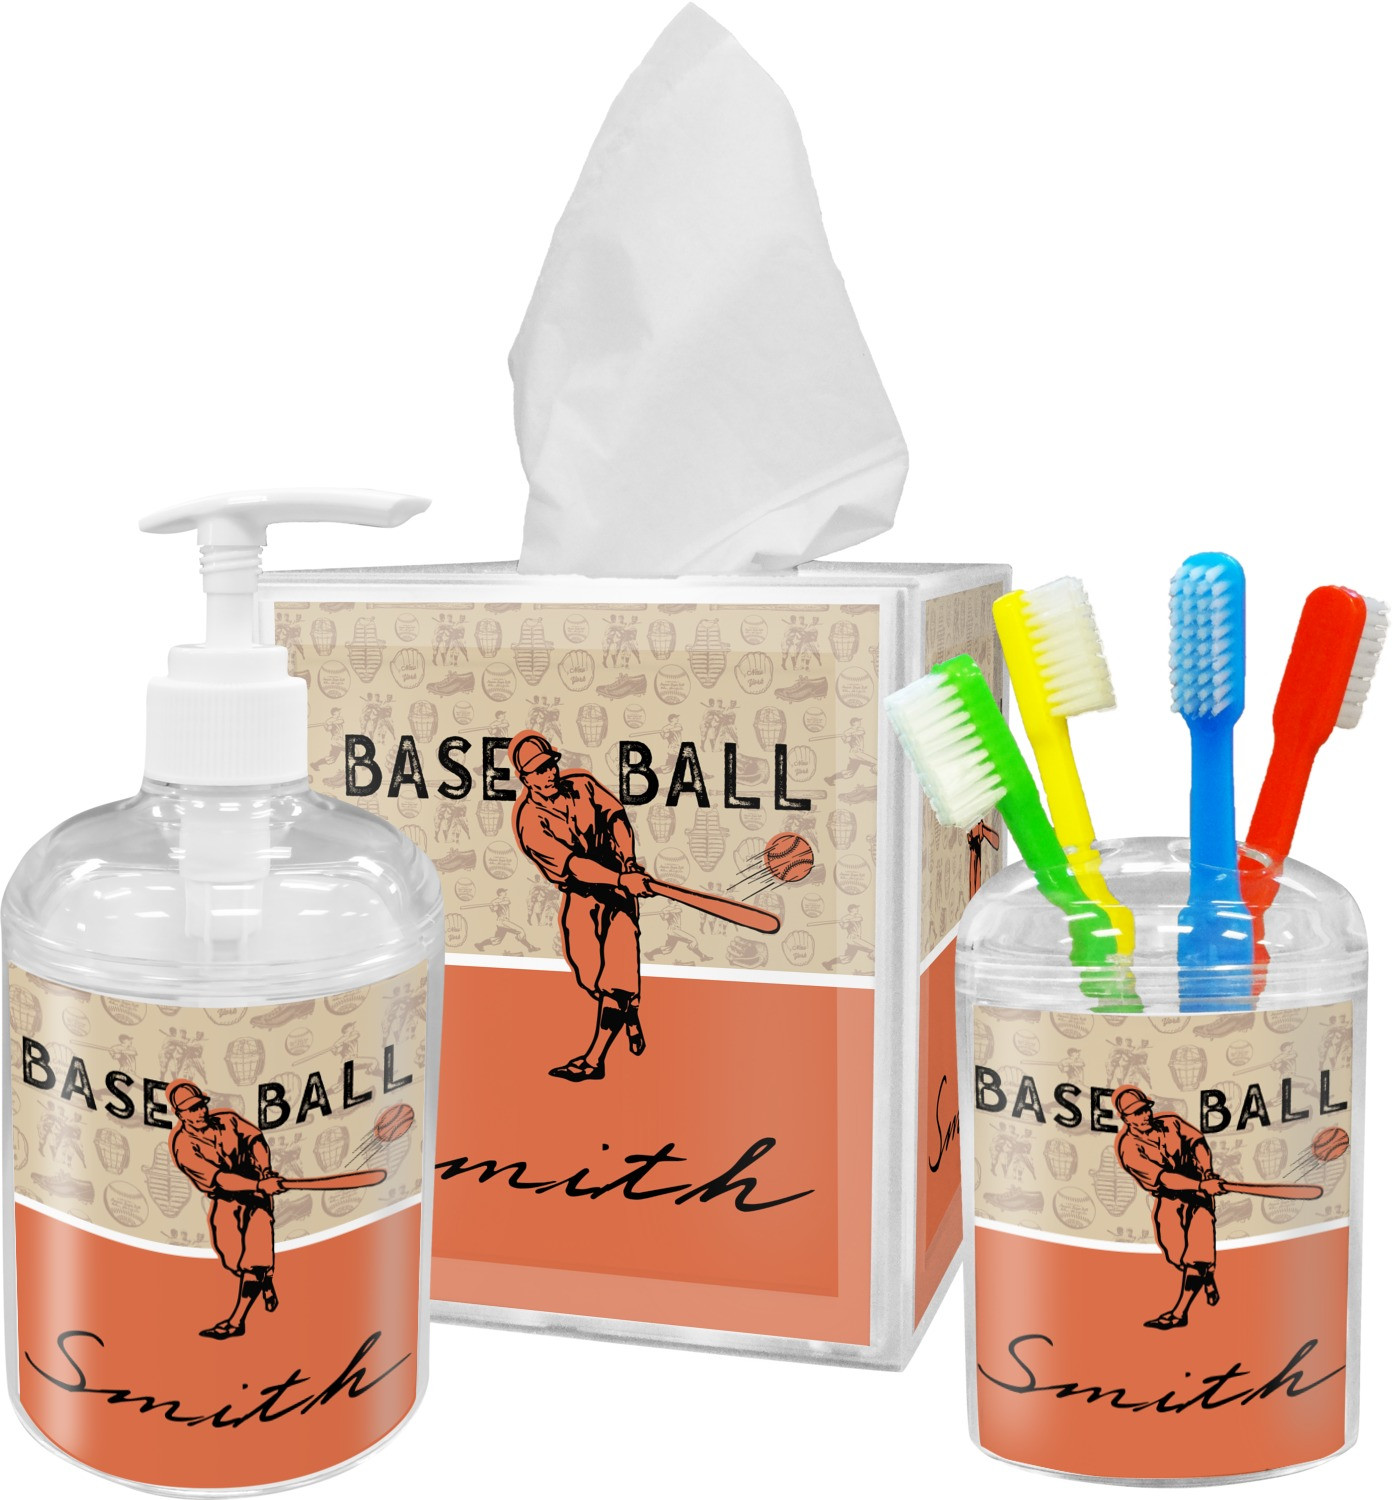 Baseball Bathroom Decor
 Retro Baseball Bathroom Accessories Set Personalized